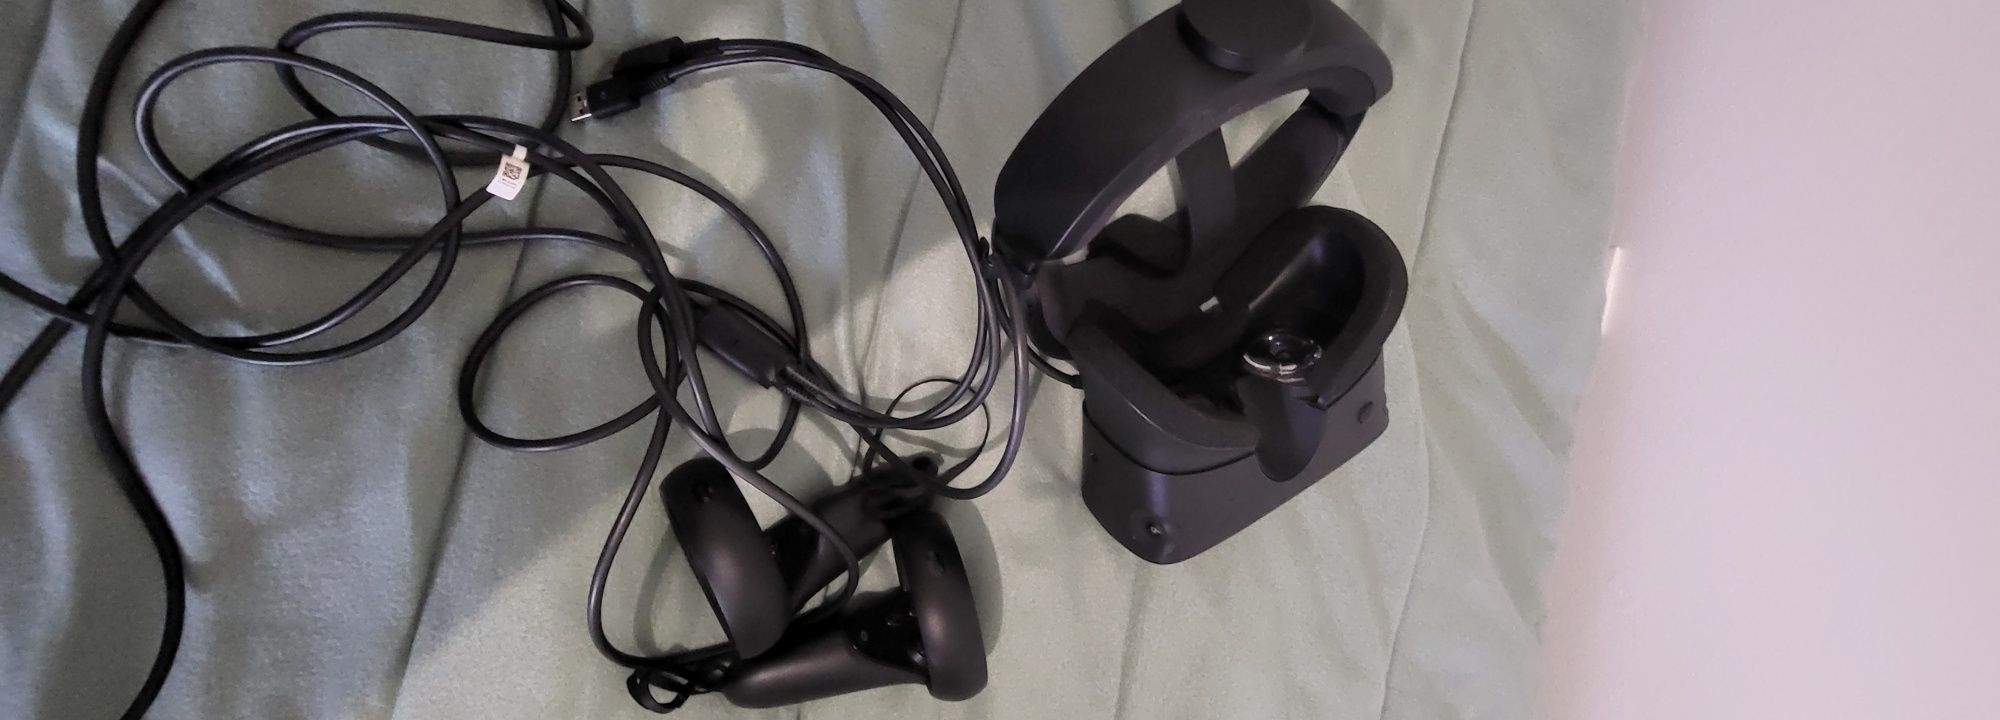 Oculus rift s headset